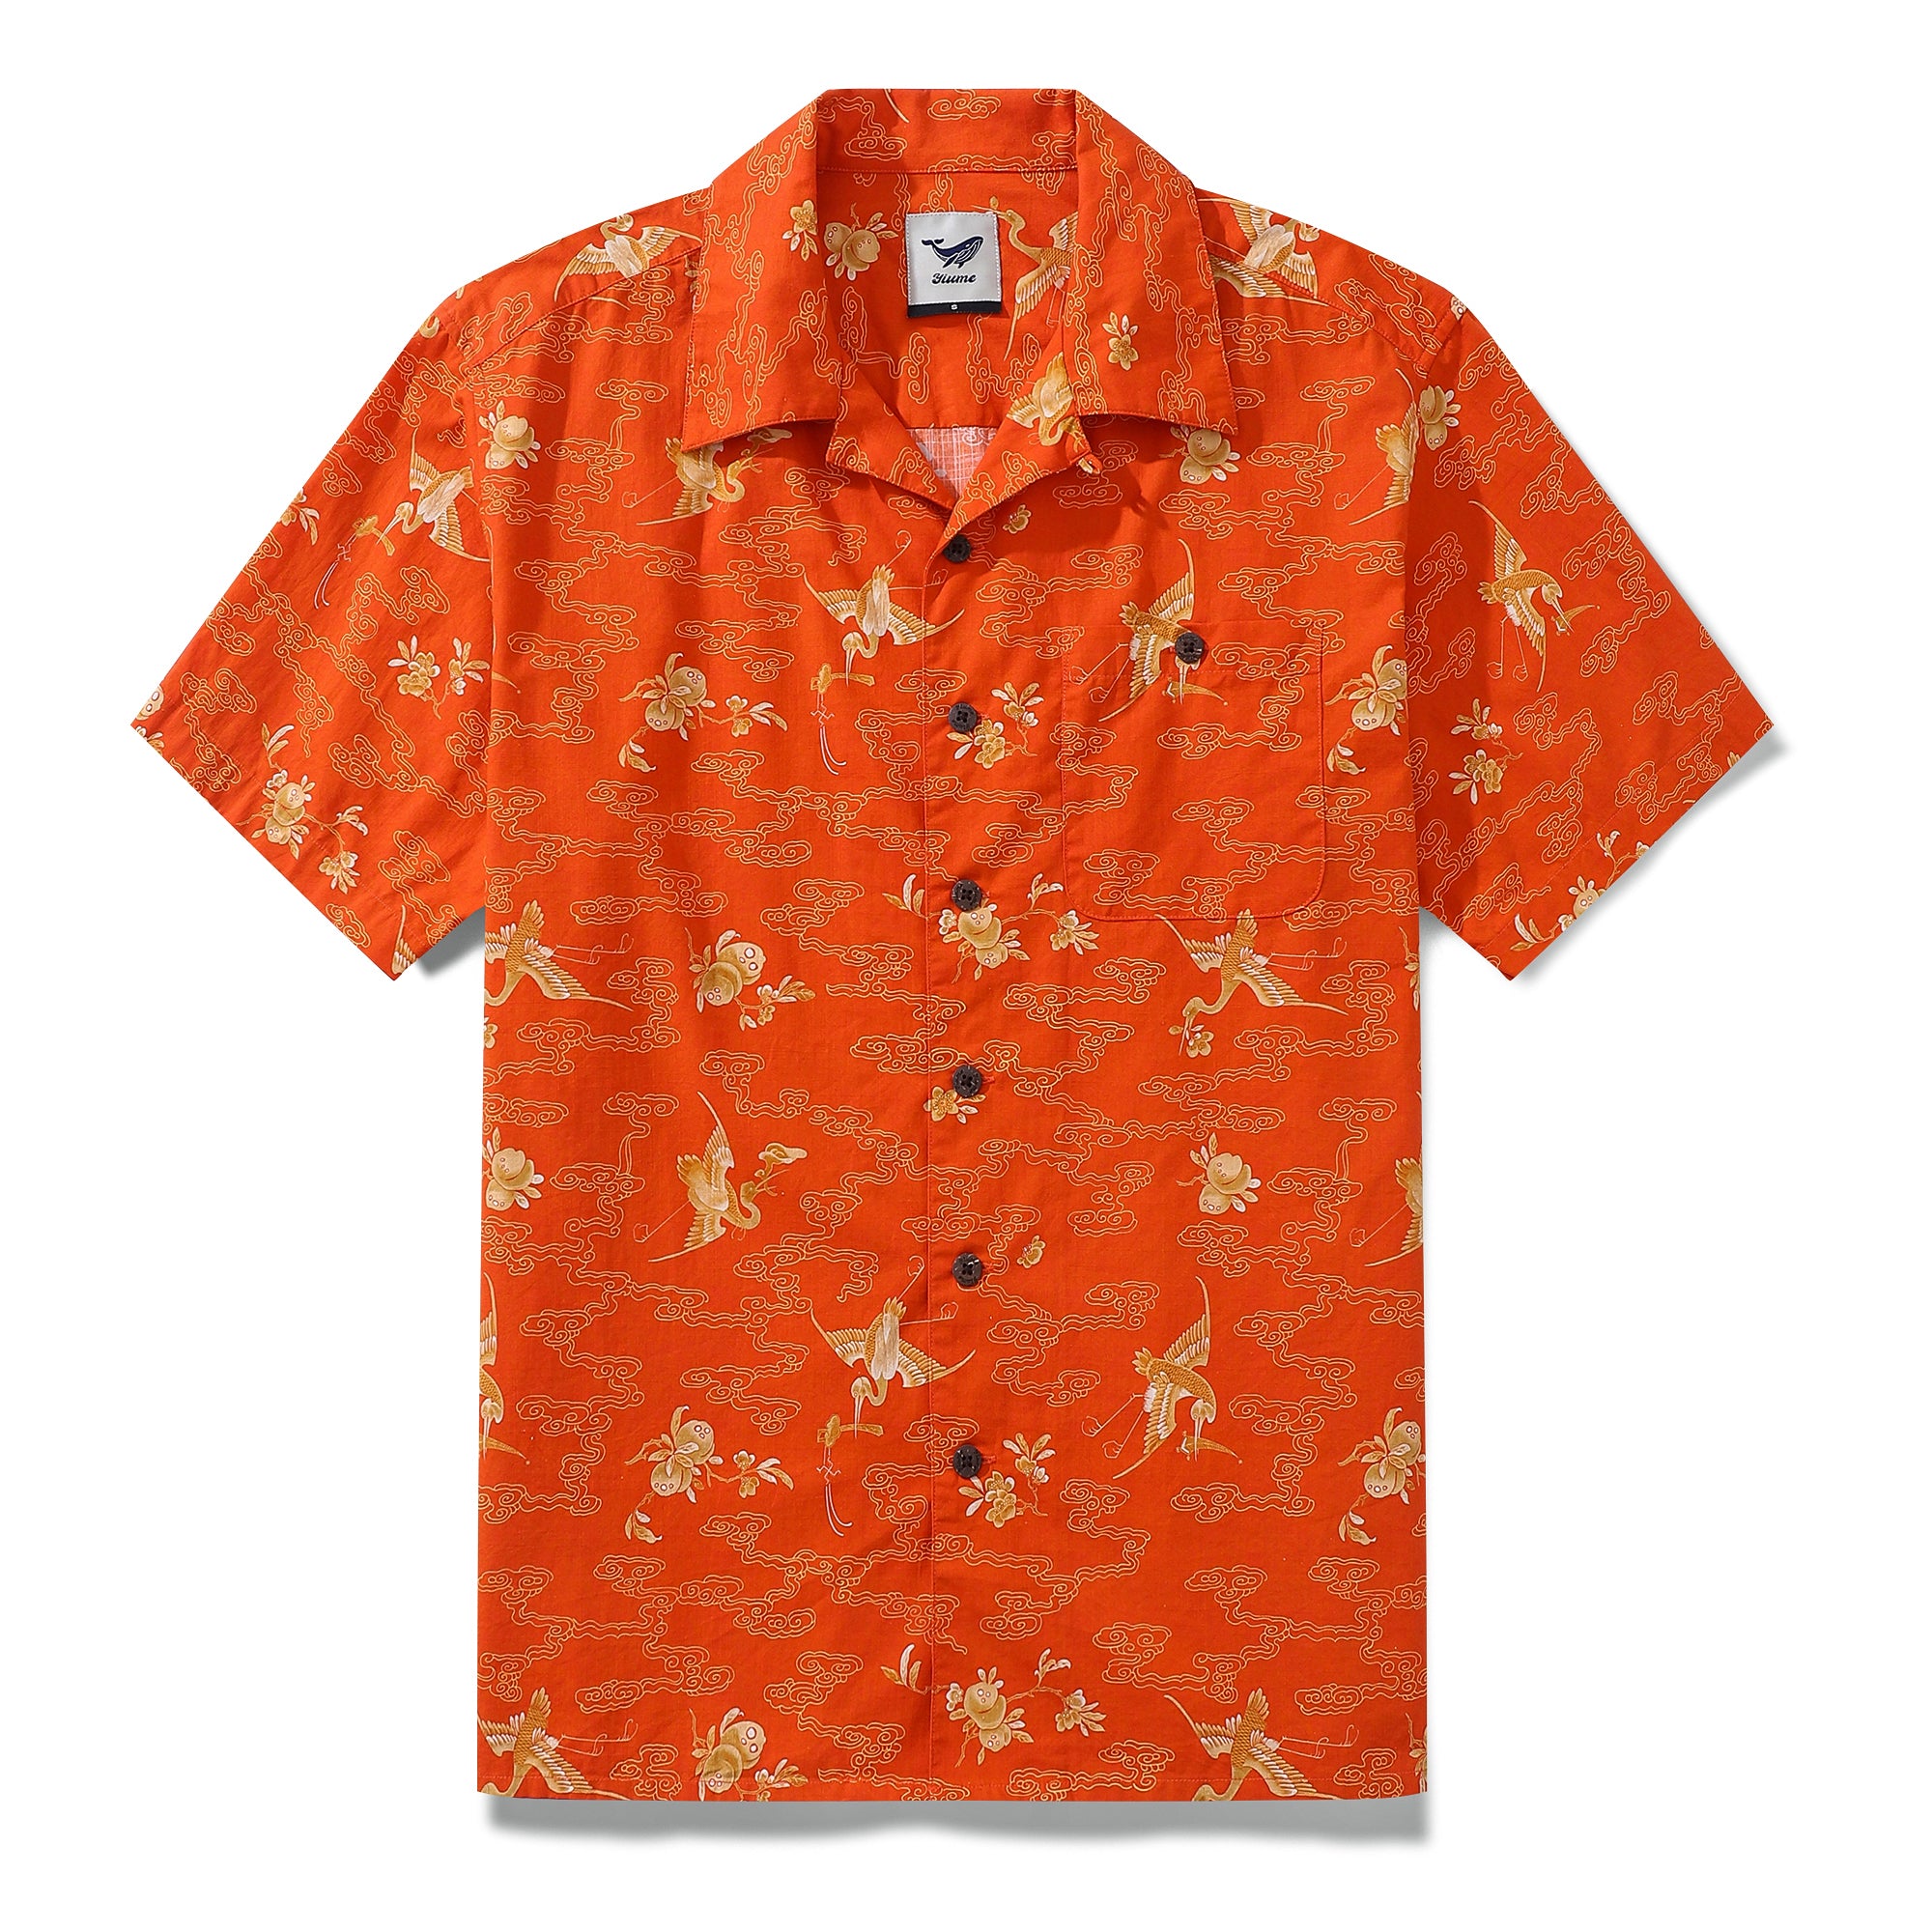 Vintage 1940s Hawaiian Shirt For Men Lucky Prosperity Shirt Camp Collar